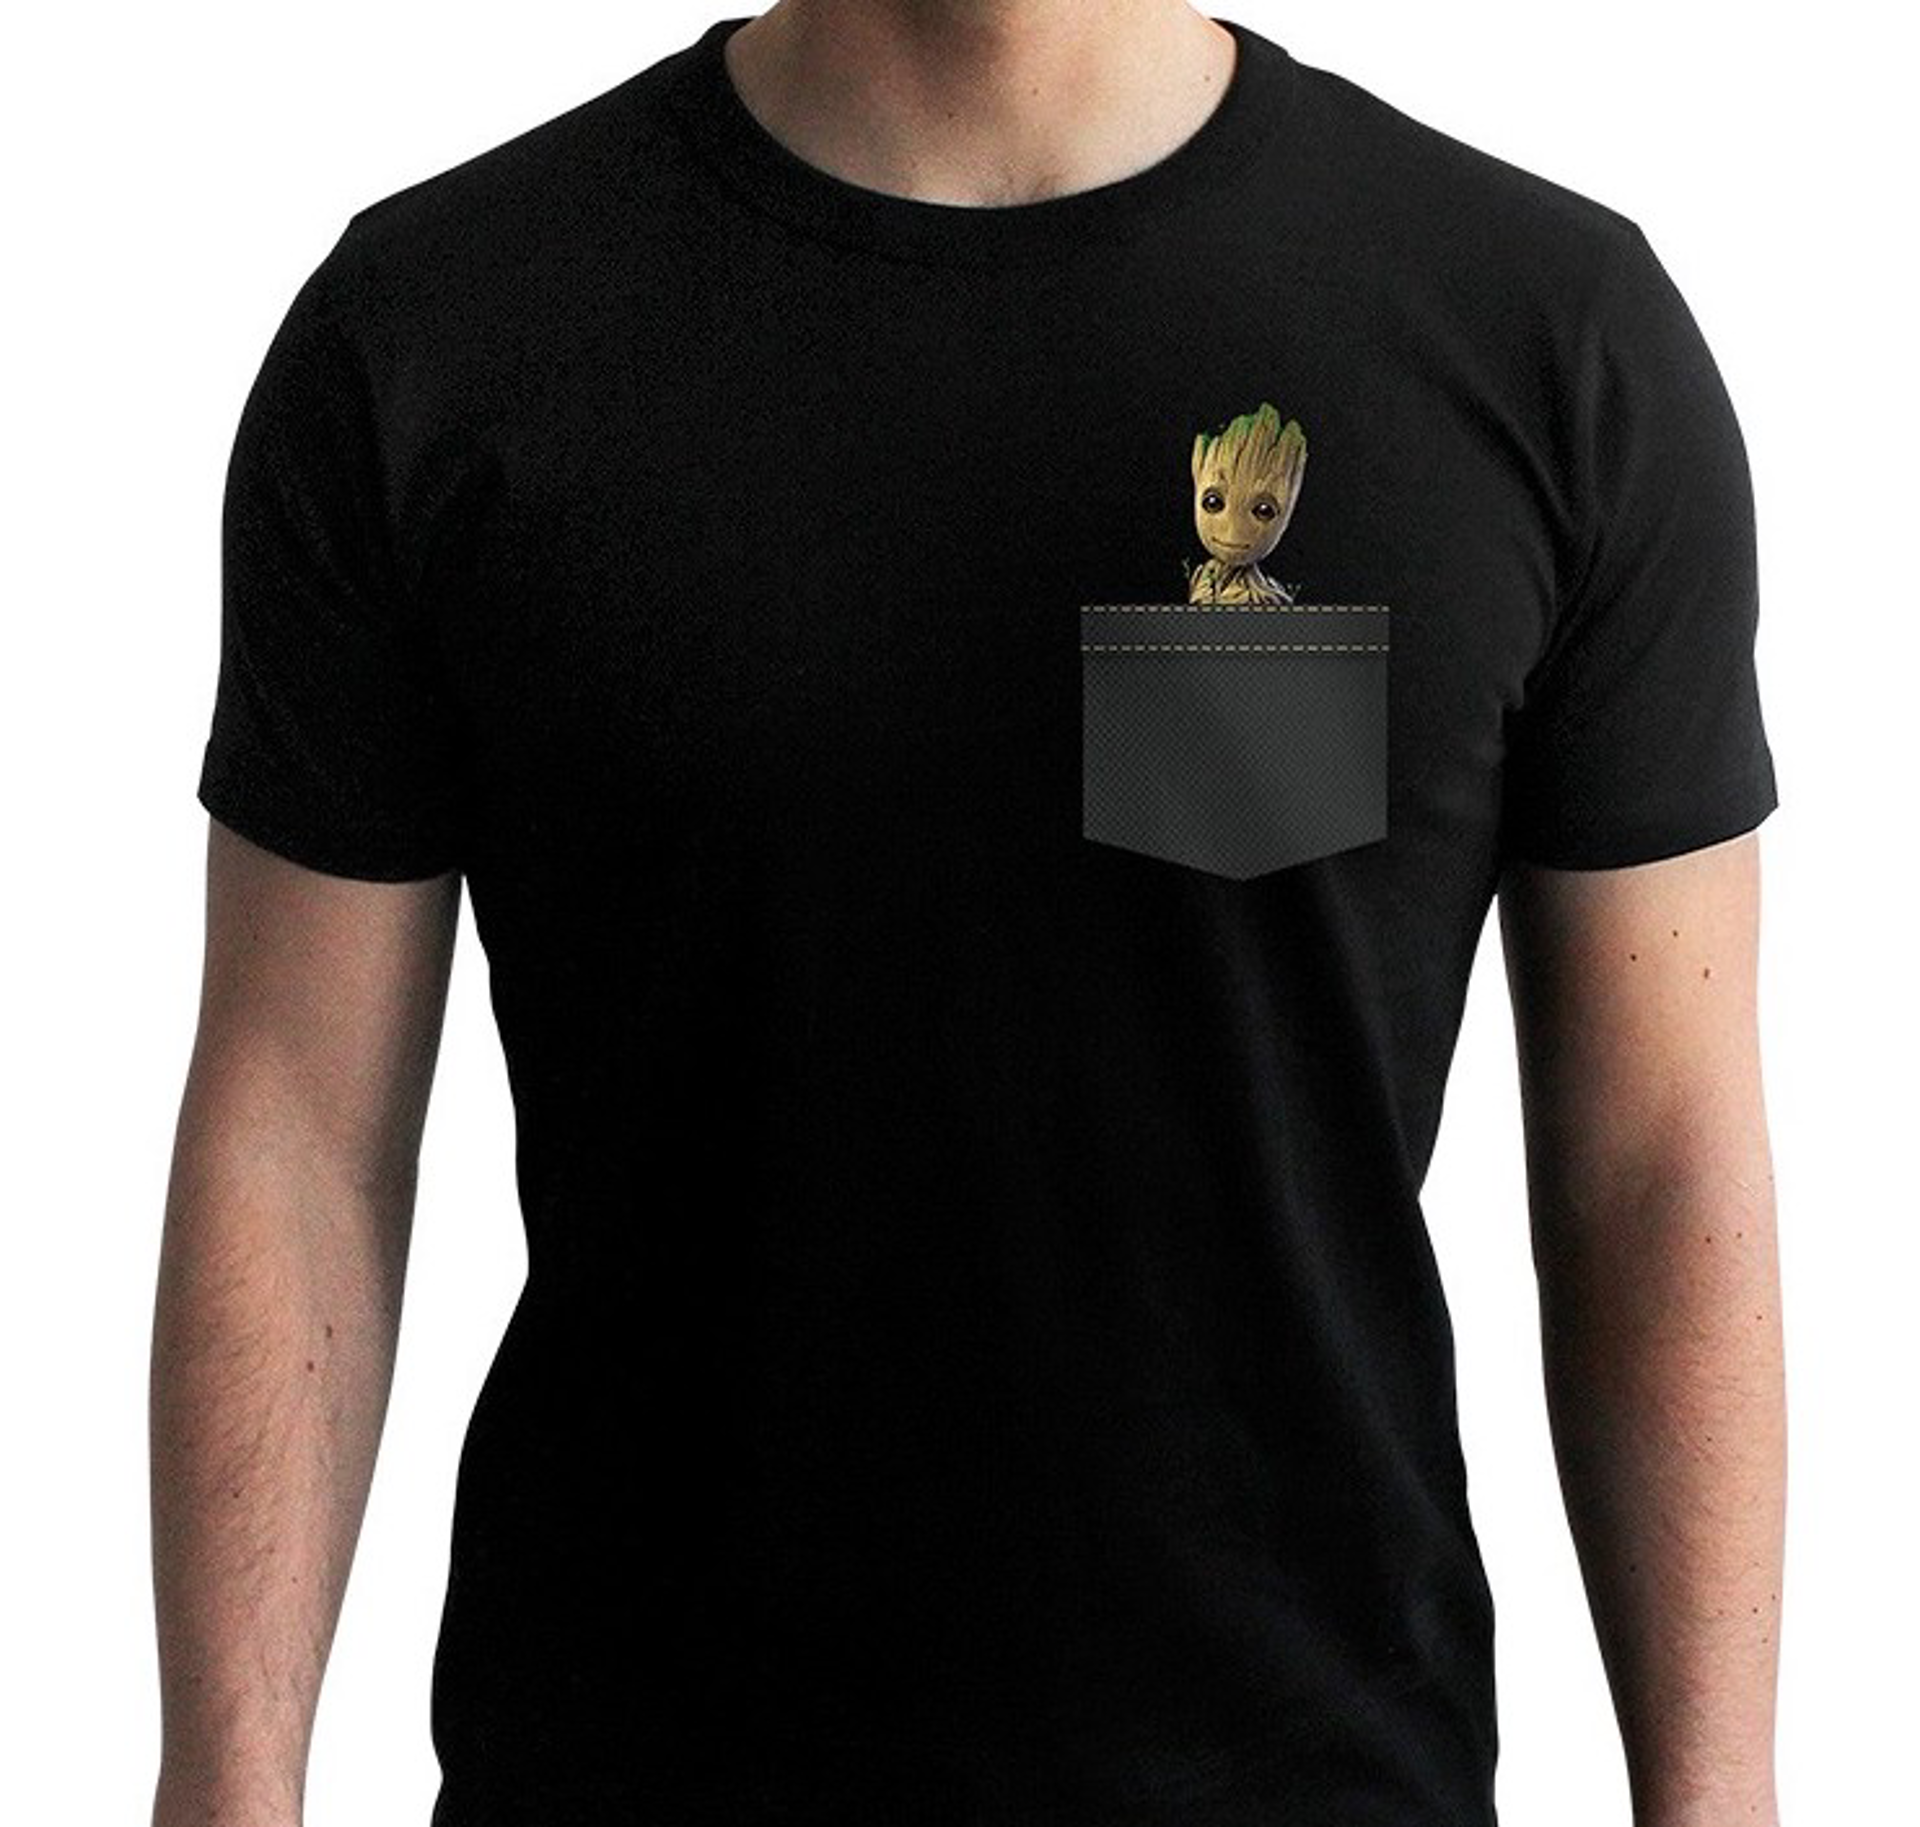 § Marvel - Pocket Groot Black Man T-Shirt L